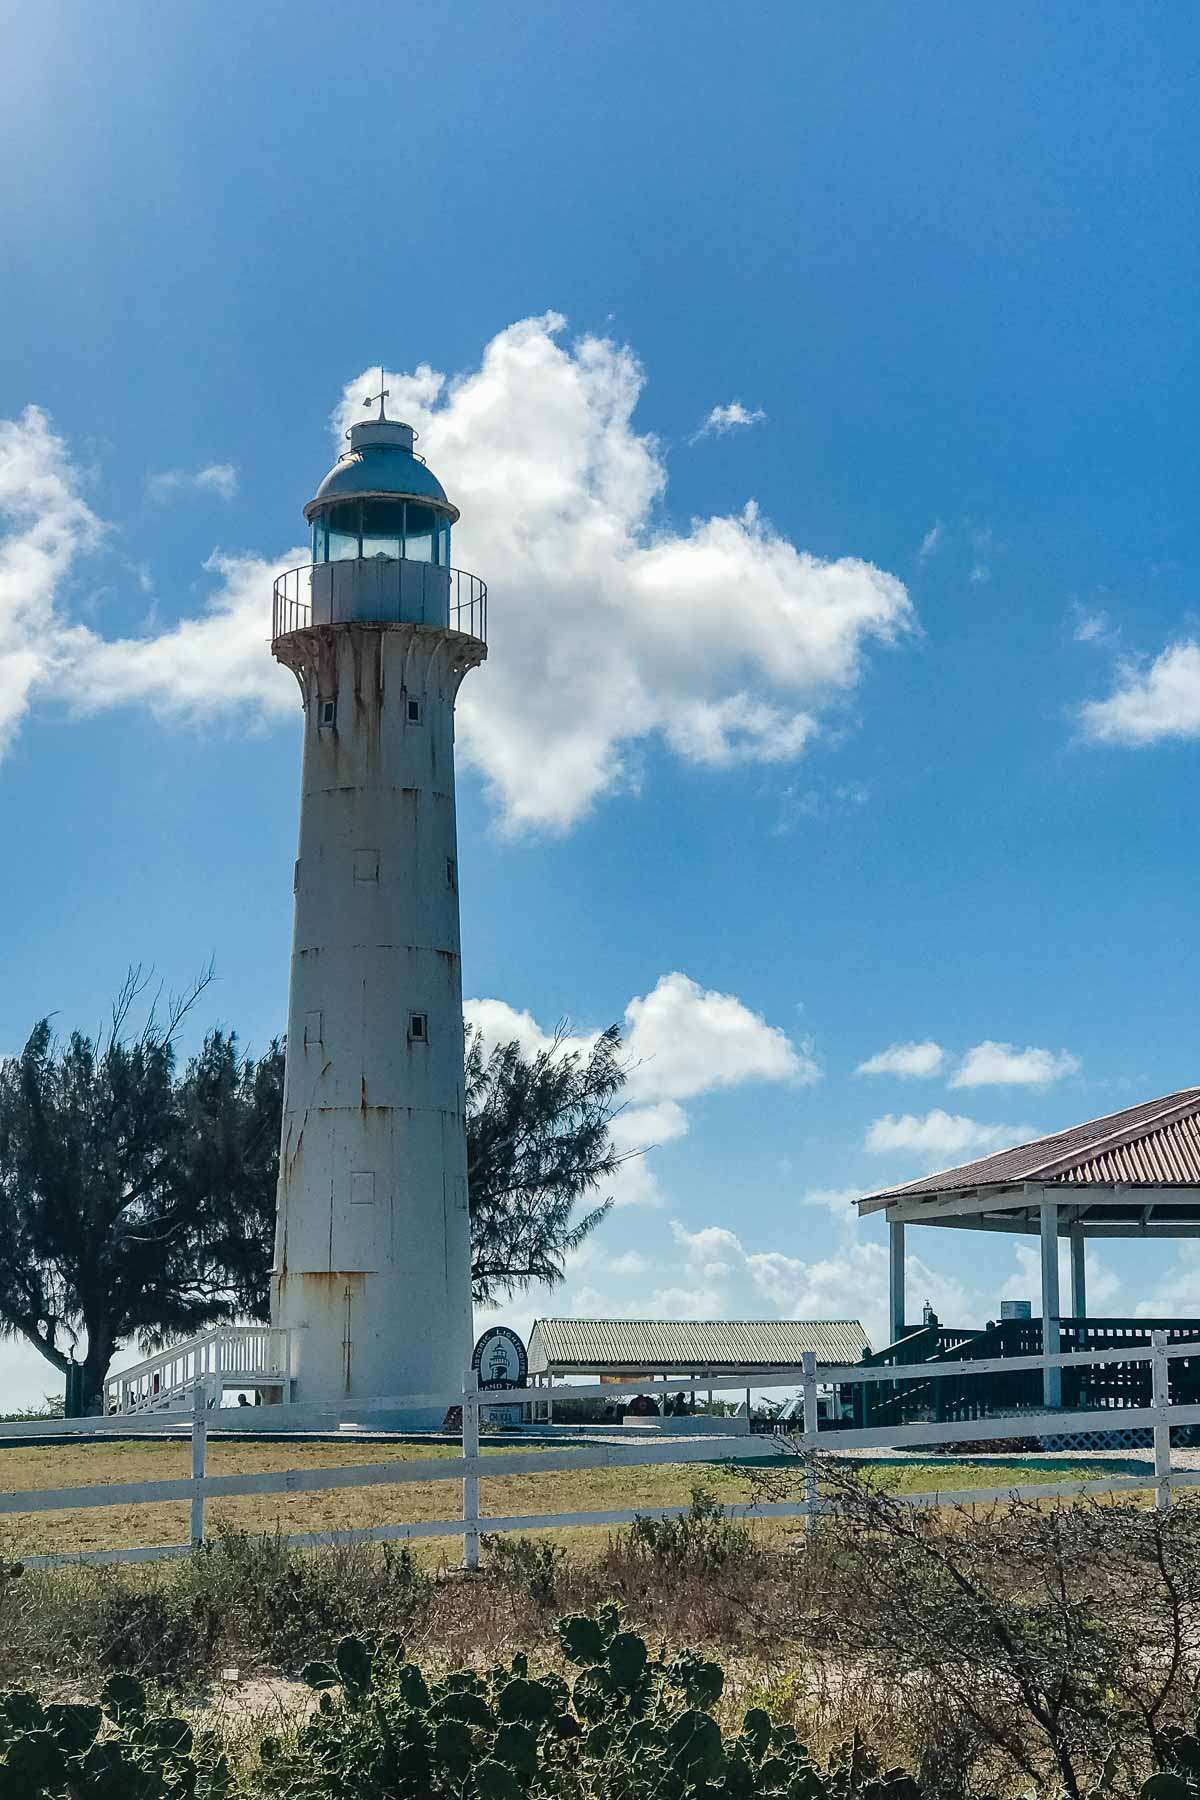 Grand Turk Historic Lighthouse